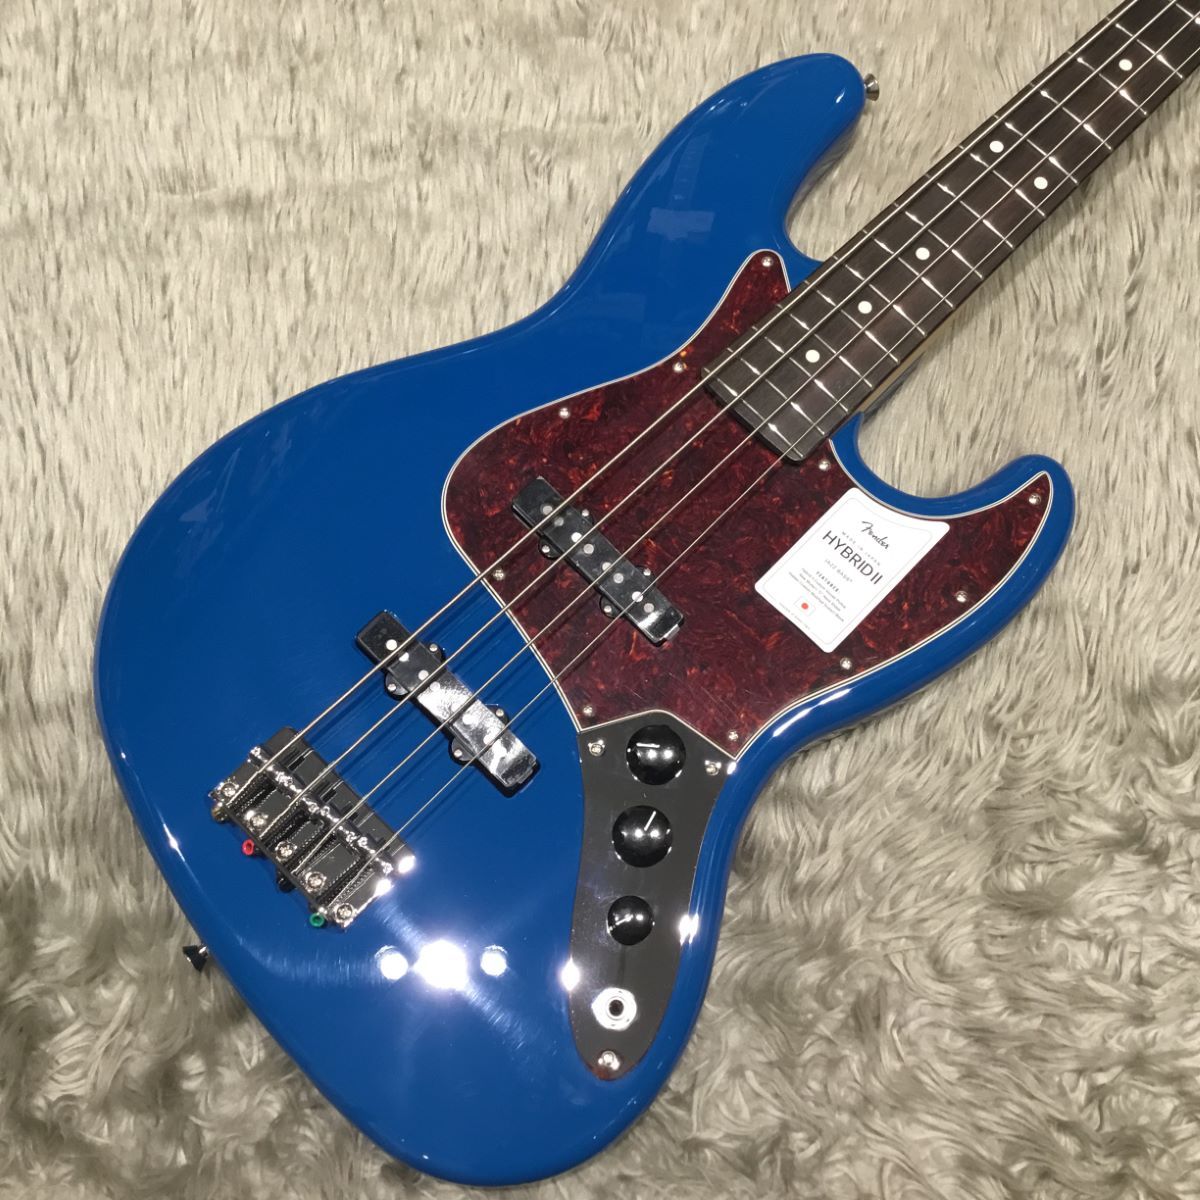 Fender Made in Japan Hybrid II Jazz Bass Rosewood Fingerboard 